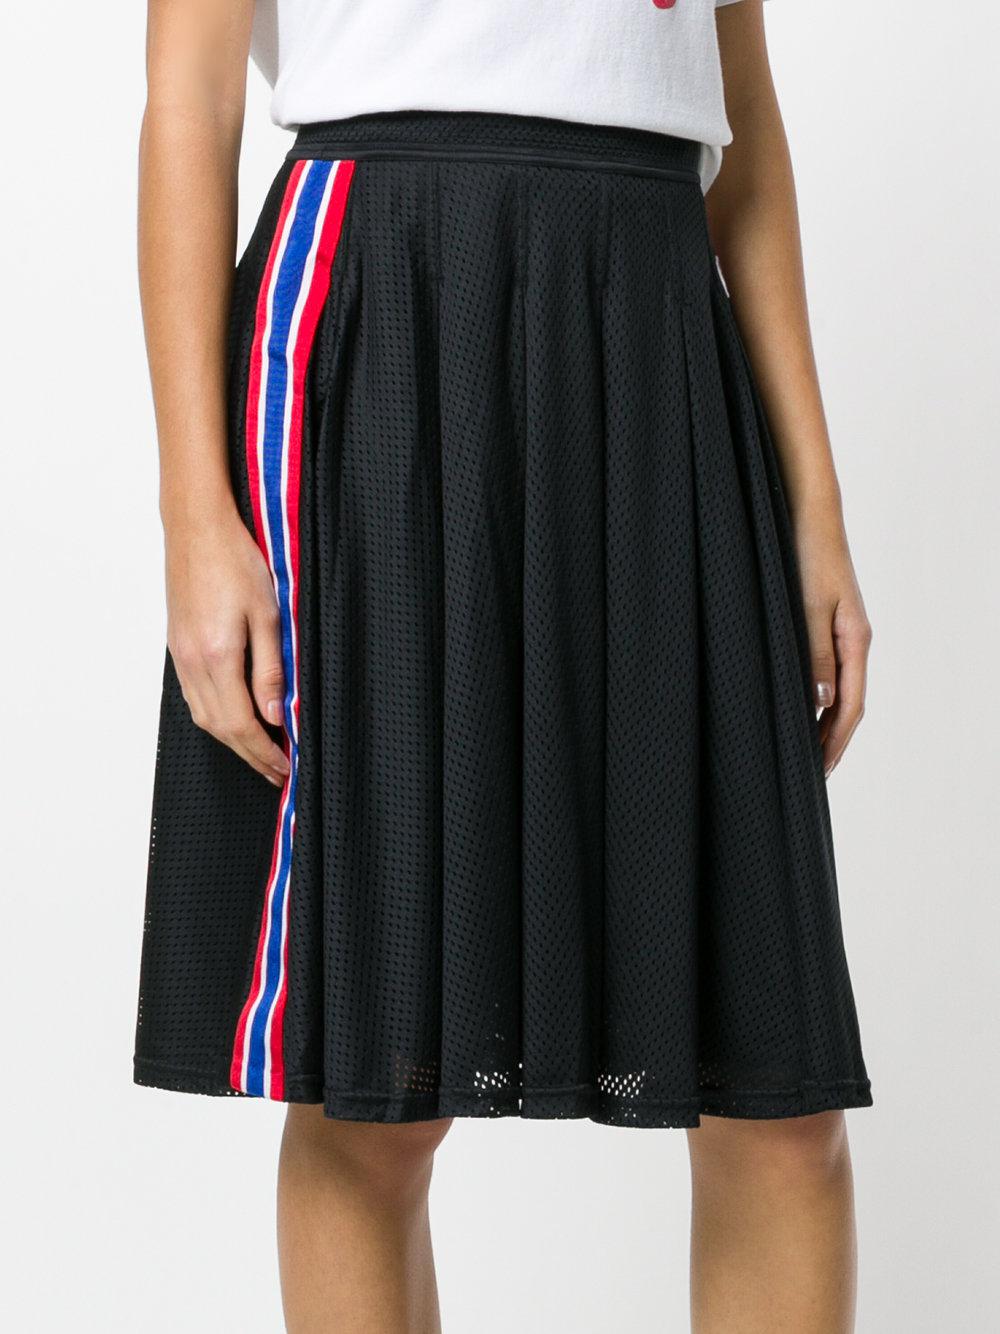 Nike Lab X Rt Basketball Skirt in Black | Lyst